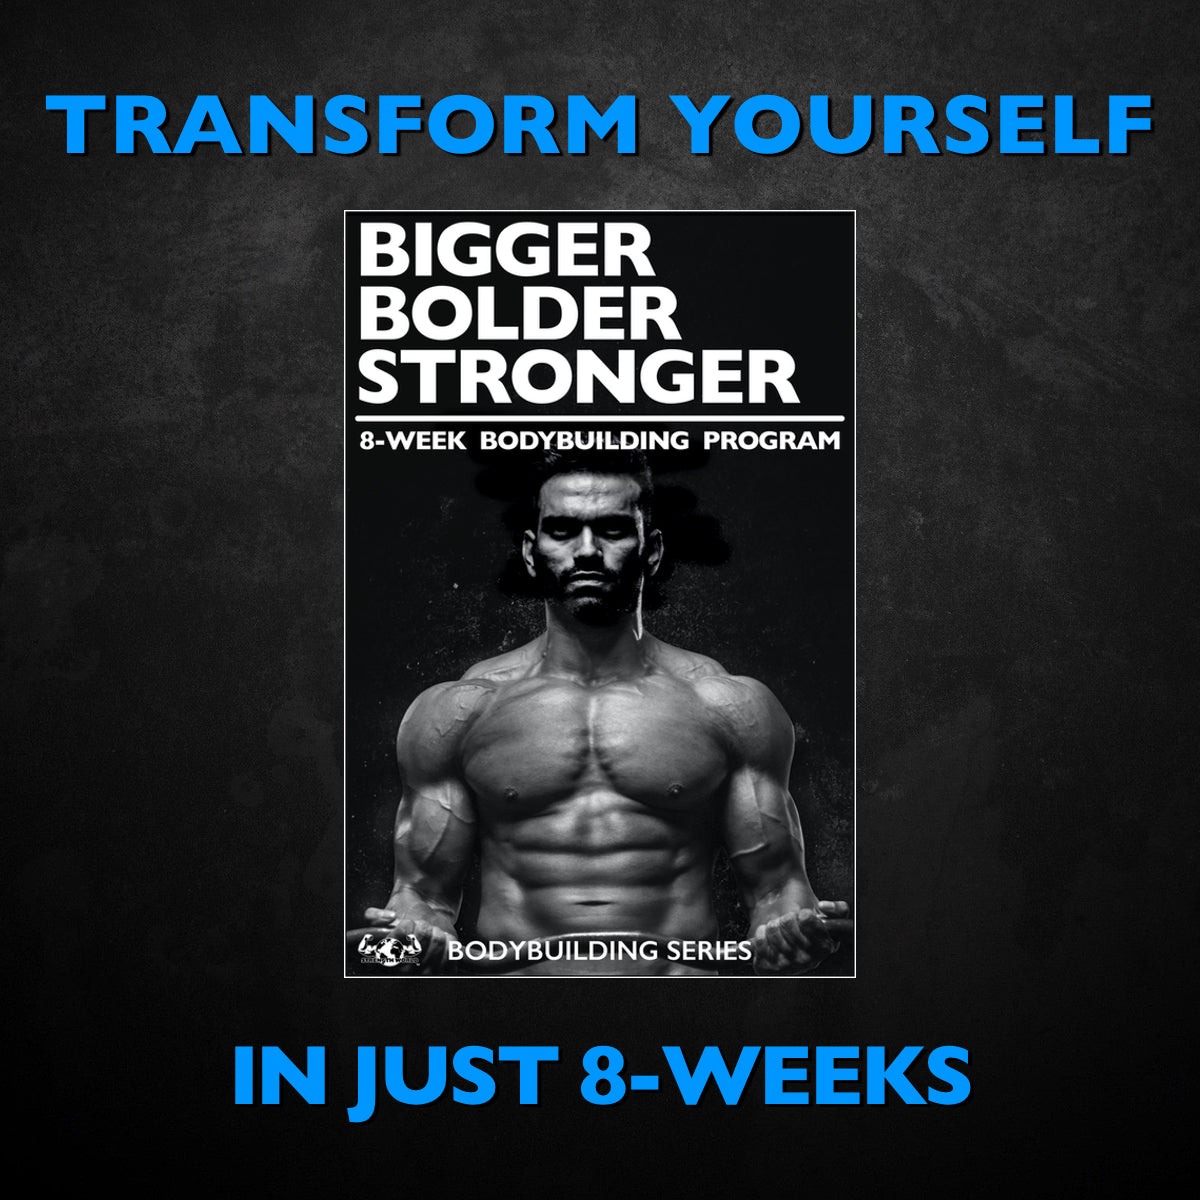 Bigger Bolder Stronger Bodybuilding Program Ad 4